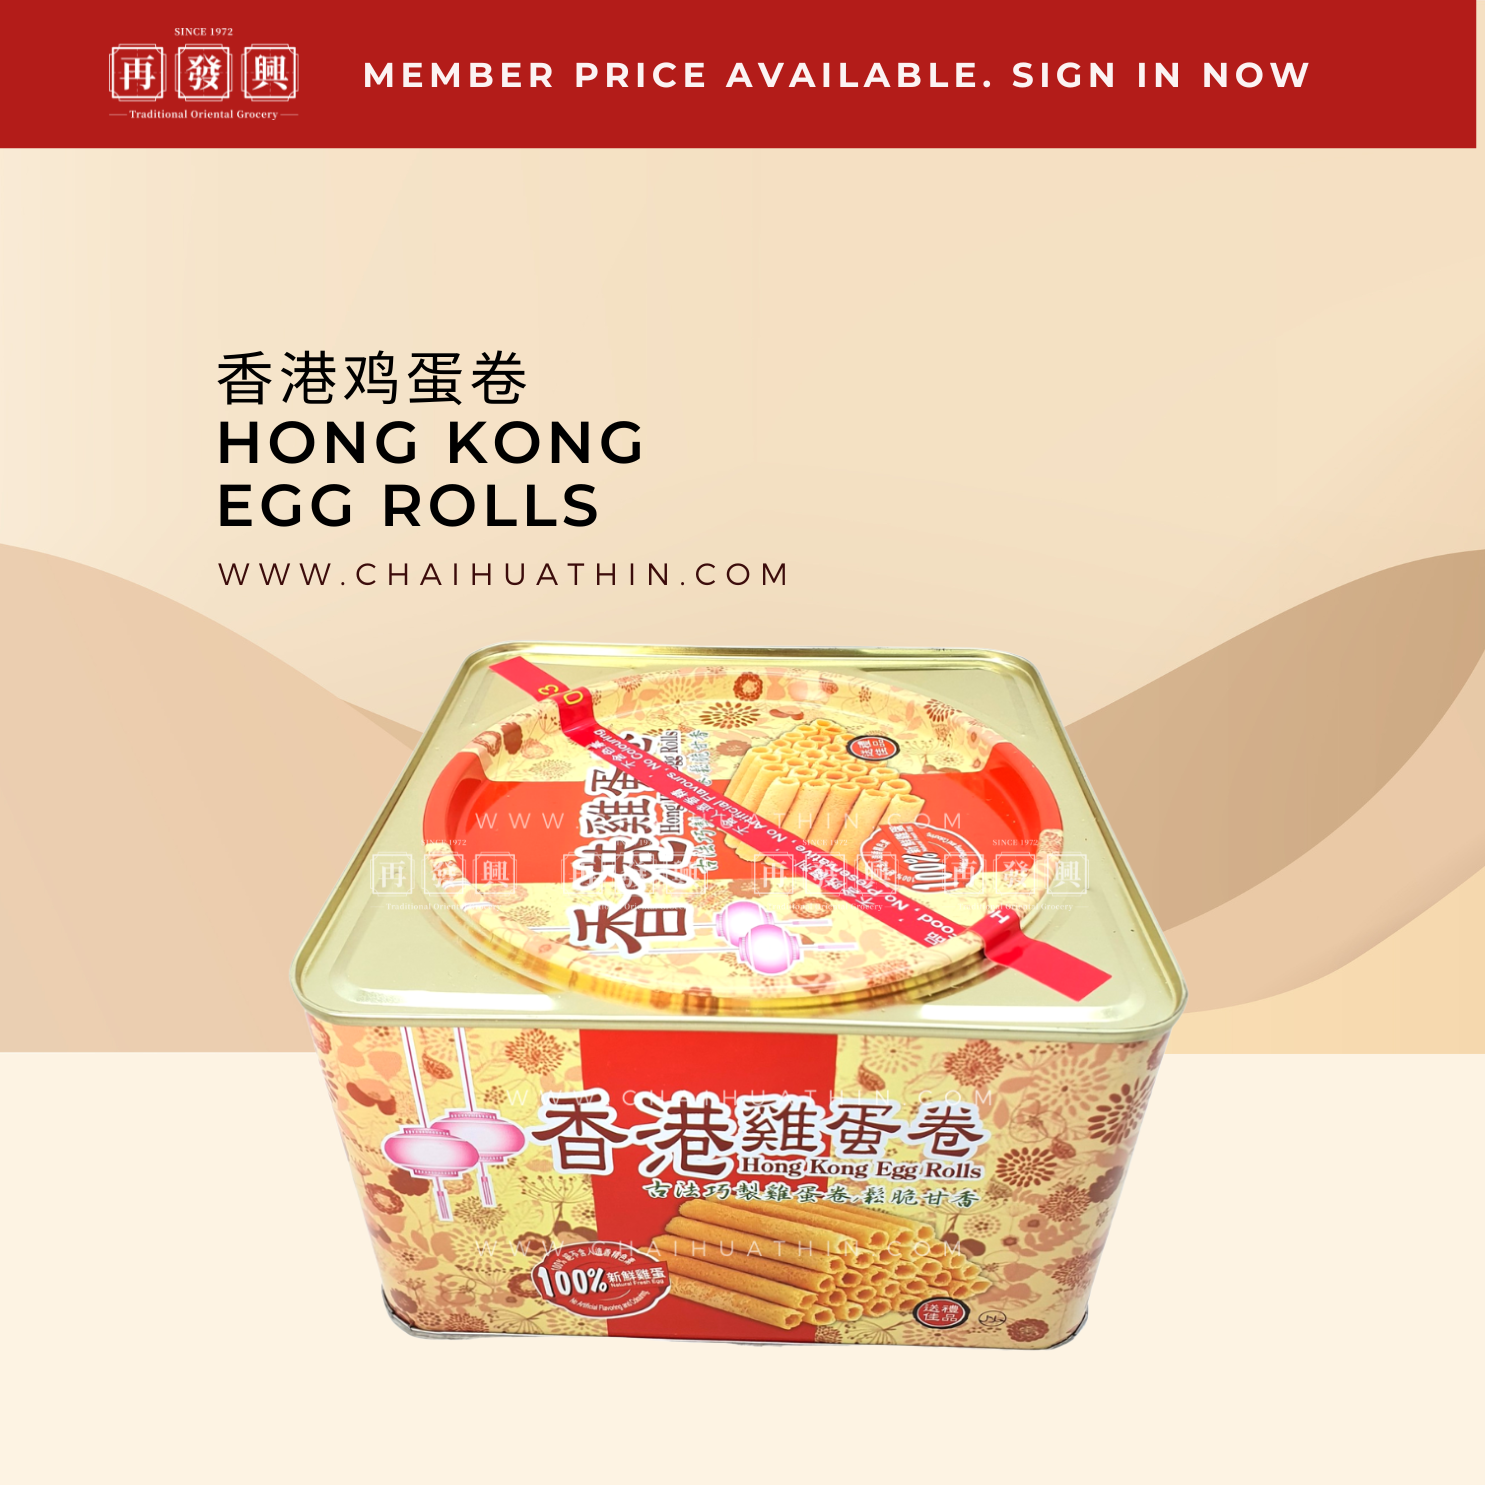 Hong Kong Egg Rolls 香港鸡蛋卷 (CNY Best Seller)